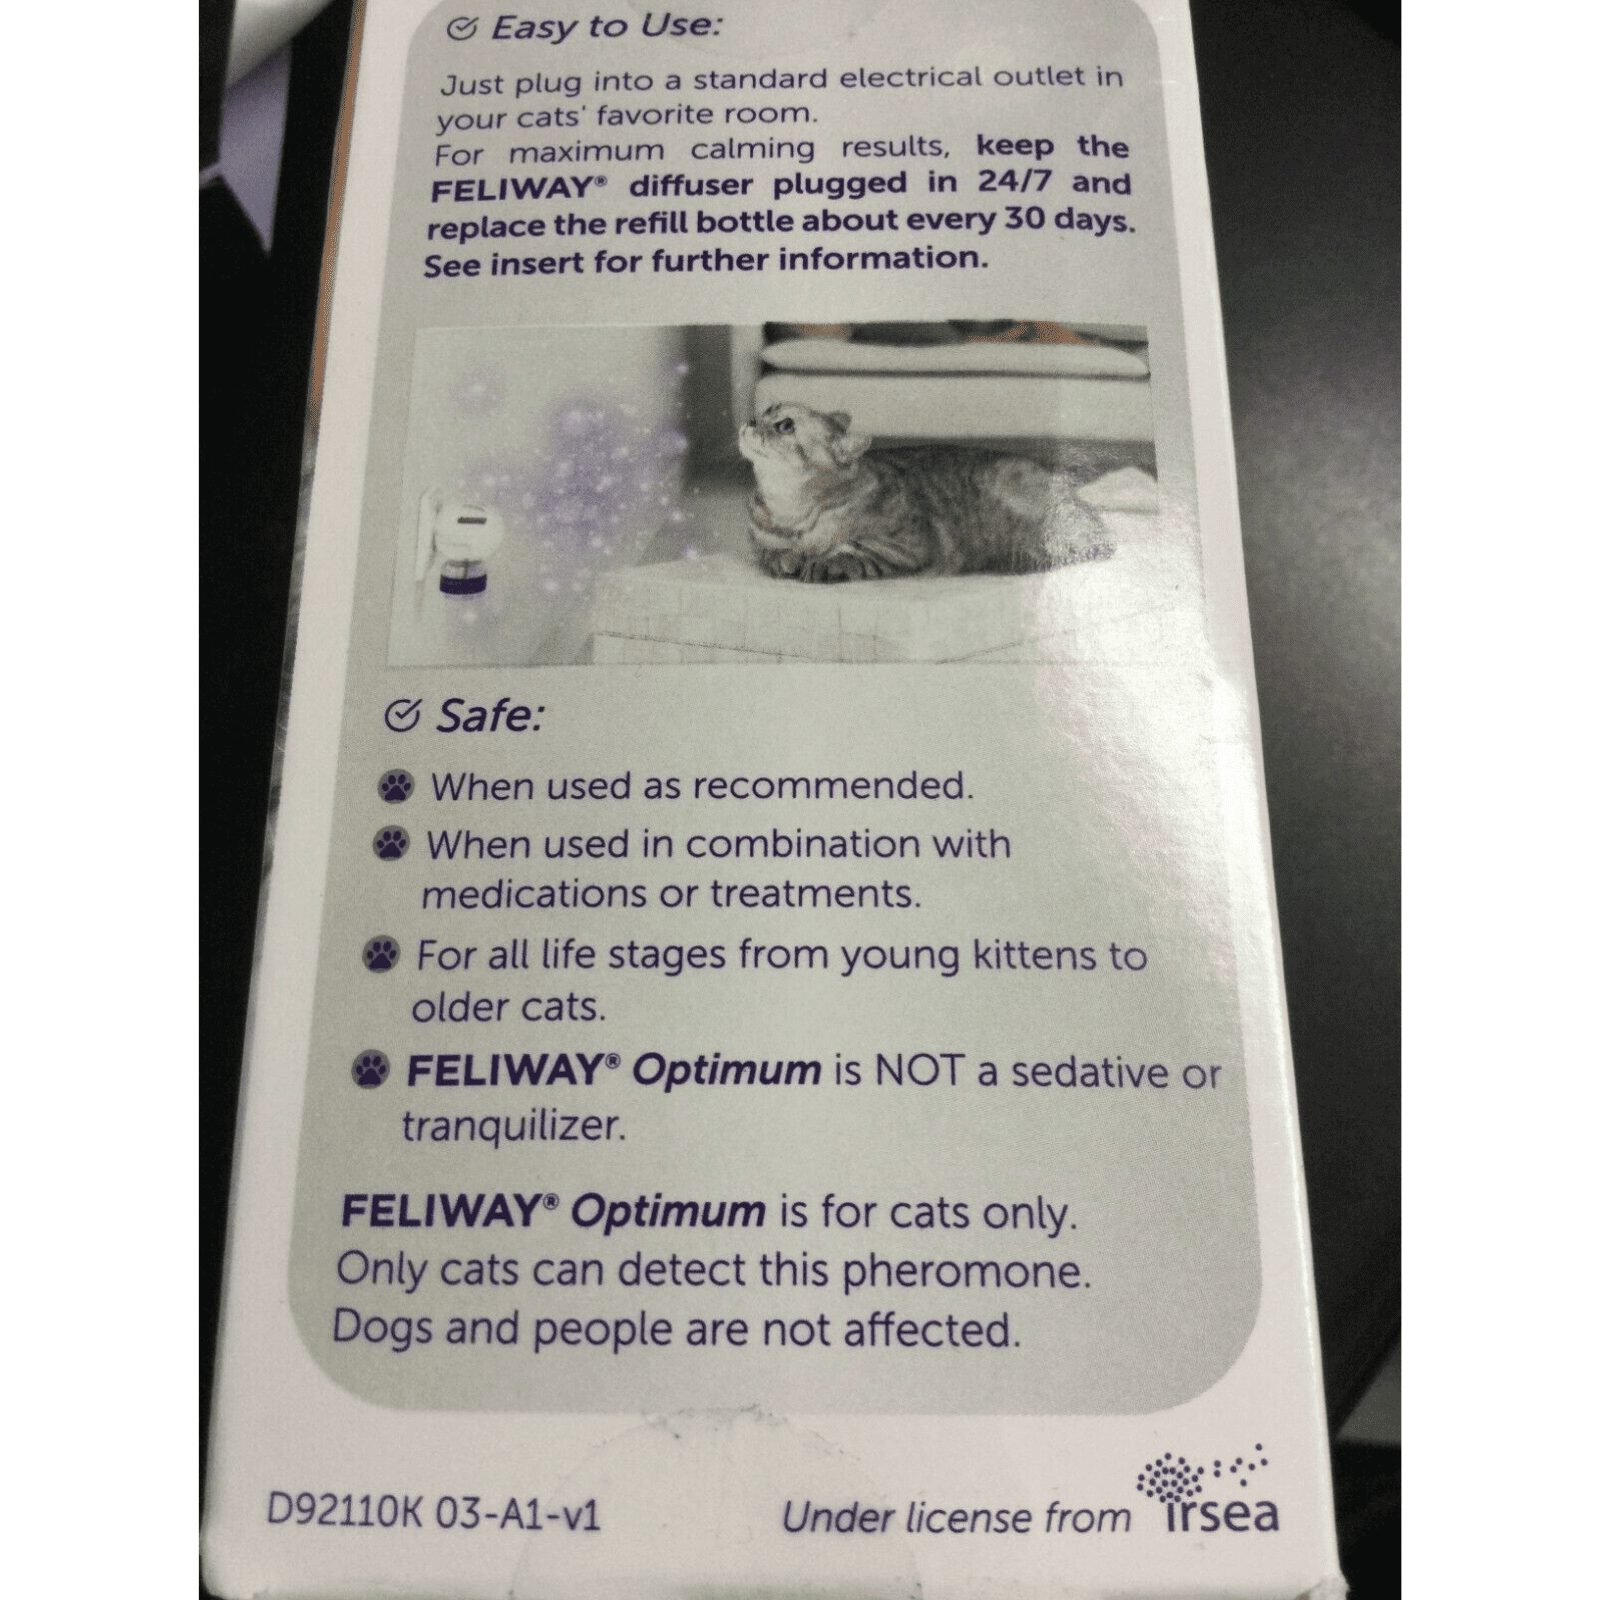 Feliway Optimum 30 Day Starter for Cats Plug In Diffuser & Refill 48ml 3105  MPN #D89410B